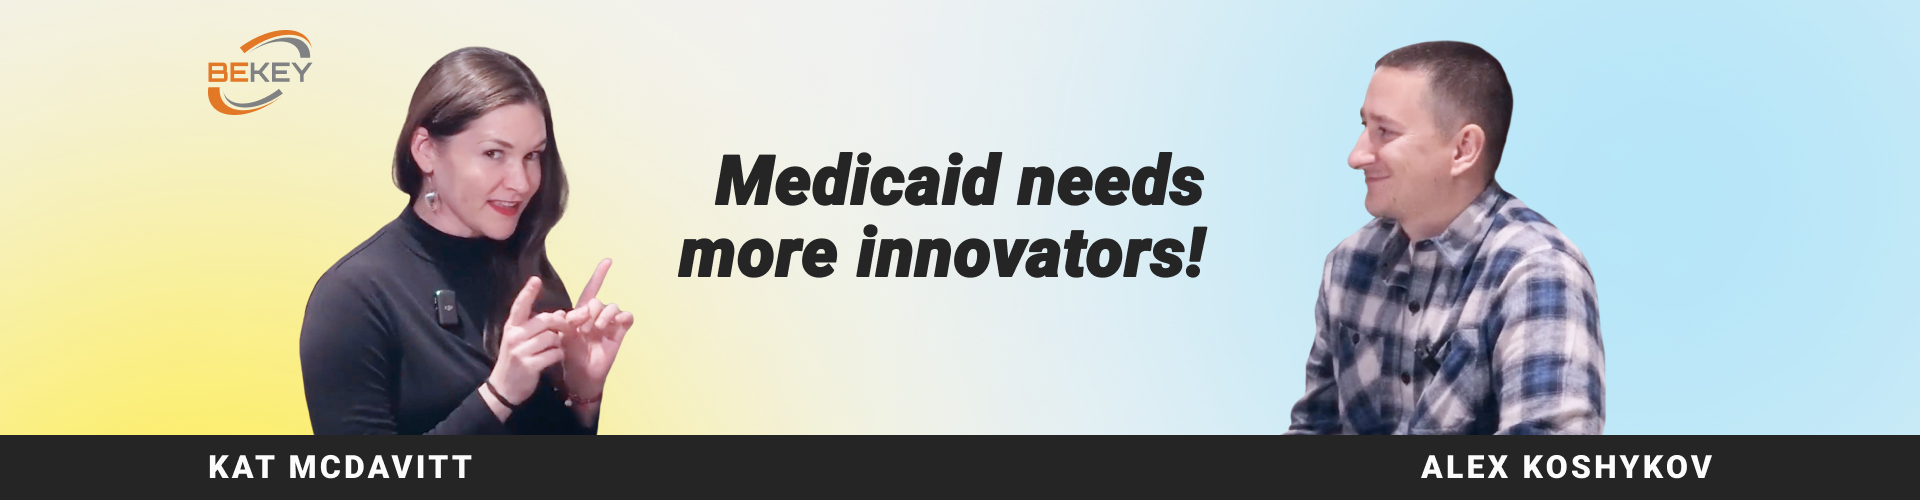 Medicaid Needs More Innovators! Digital Health Interviews: Kat McDavitt (Kovalchik) - image